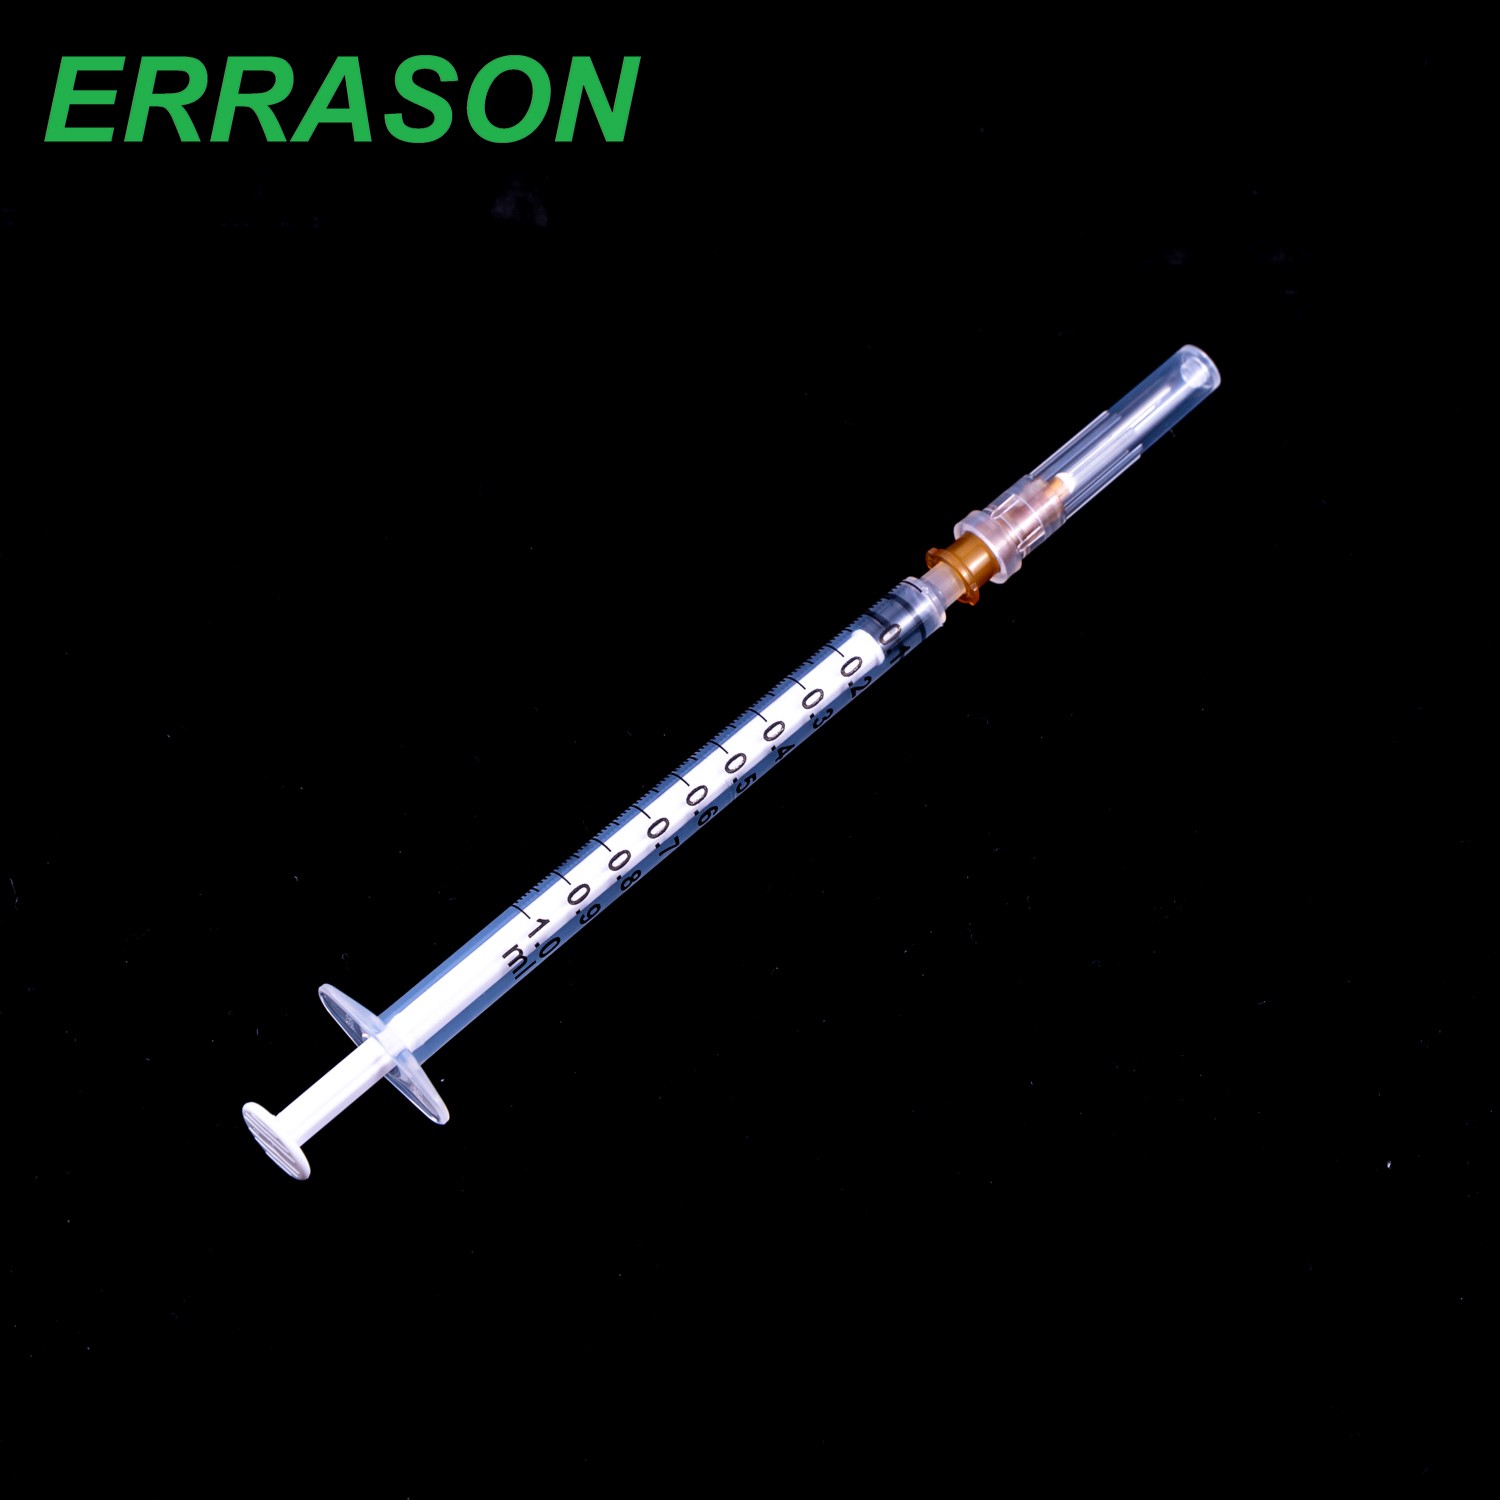 Disposable sterile insulin syringe